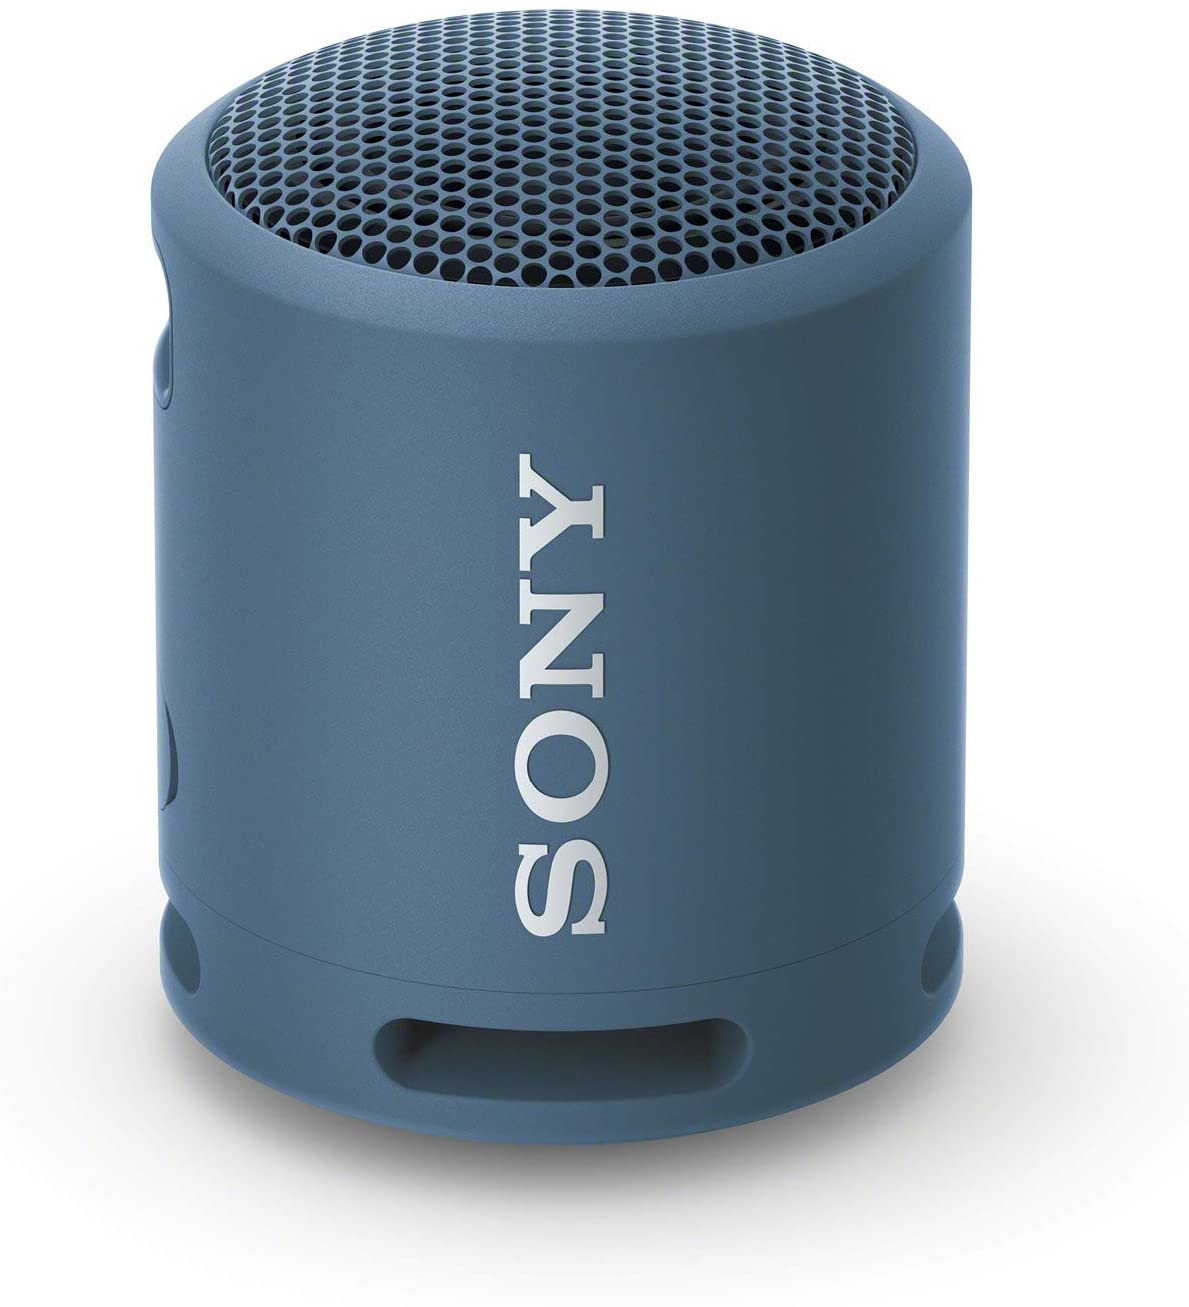 Sony SRS-XB13 Extra BASS Wireless Portable Compact Speaker IP67 Waterproof Bluetooth, Light Blue (SRSXB13/L)